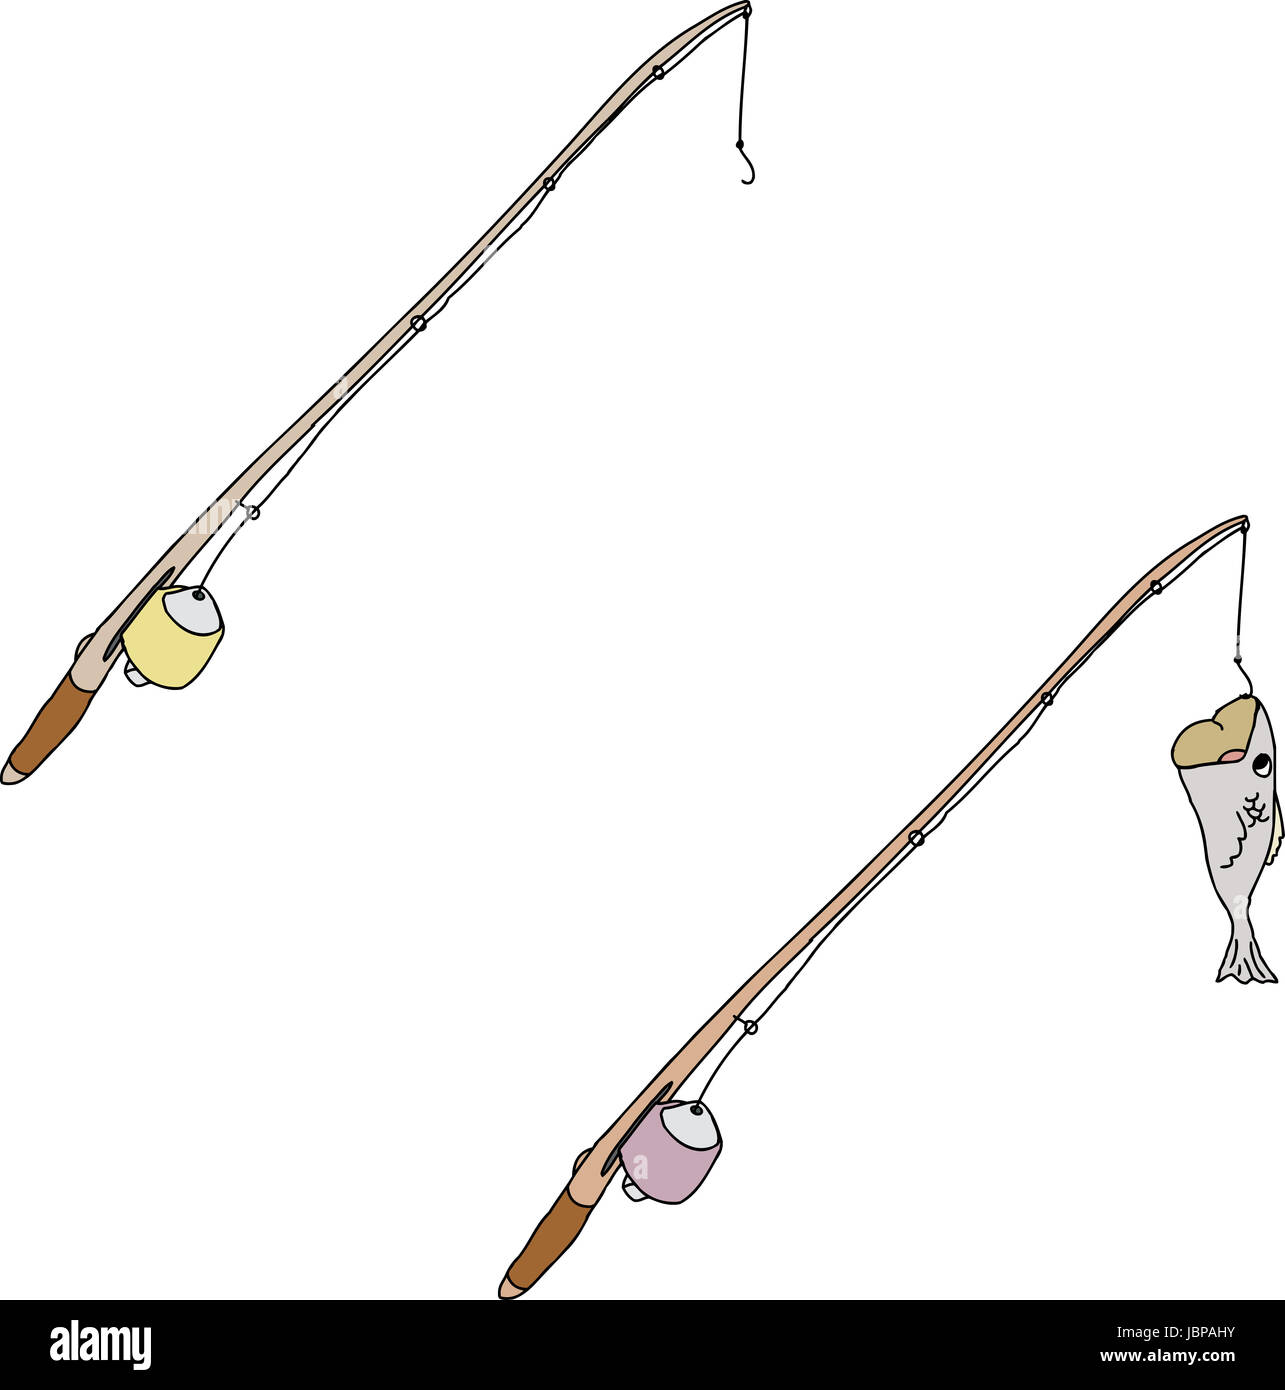 Cartoon fishing pole with hook and fish Stock Photo - Alamy